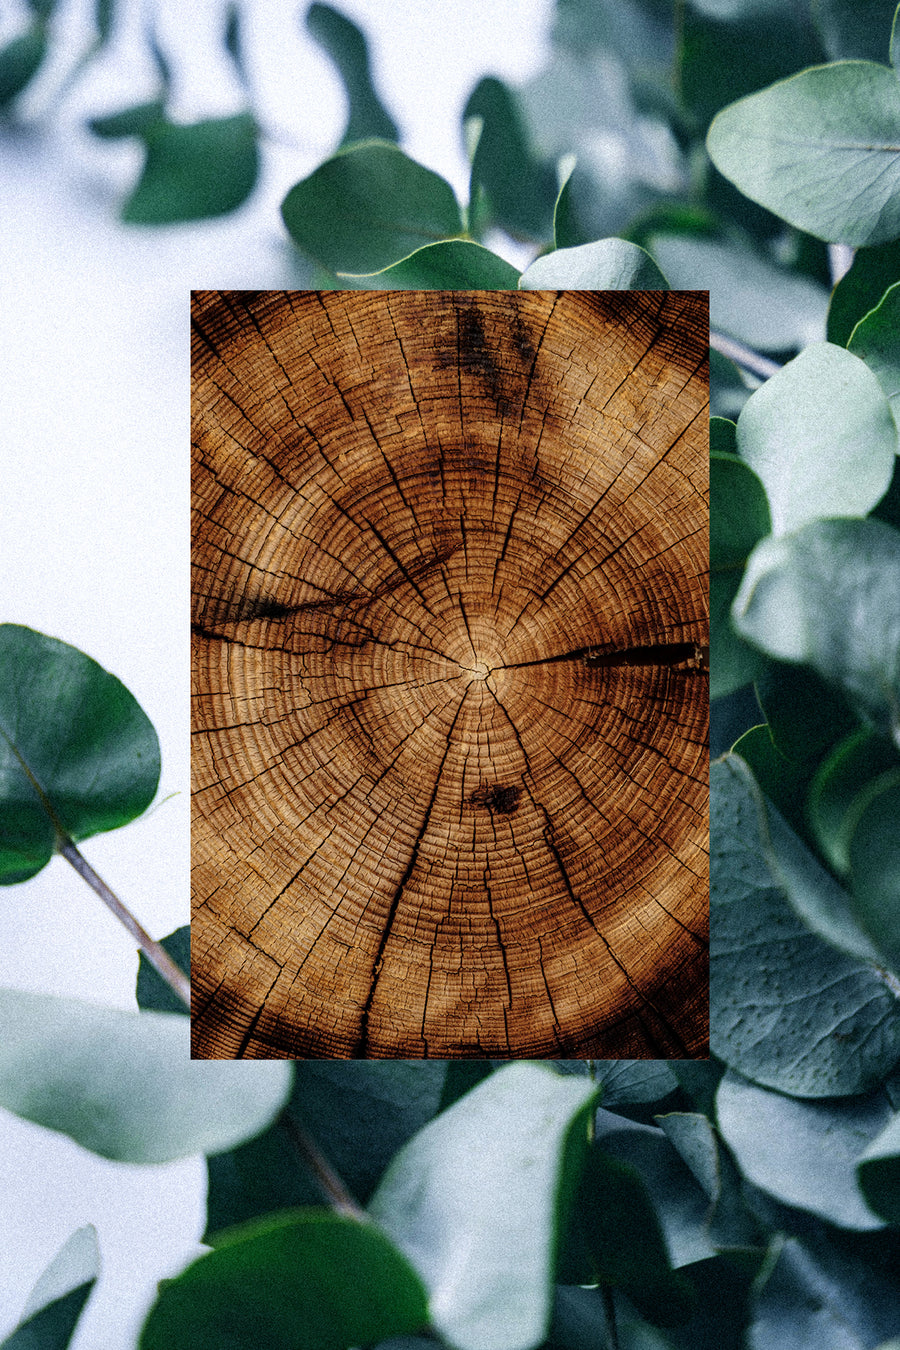 Cedar tree slice superimposed over Eucalyptus leaves + branches